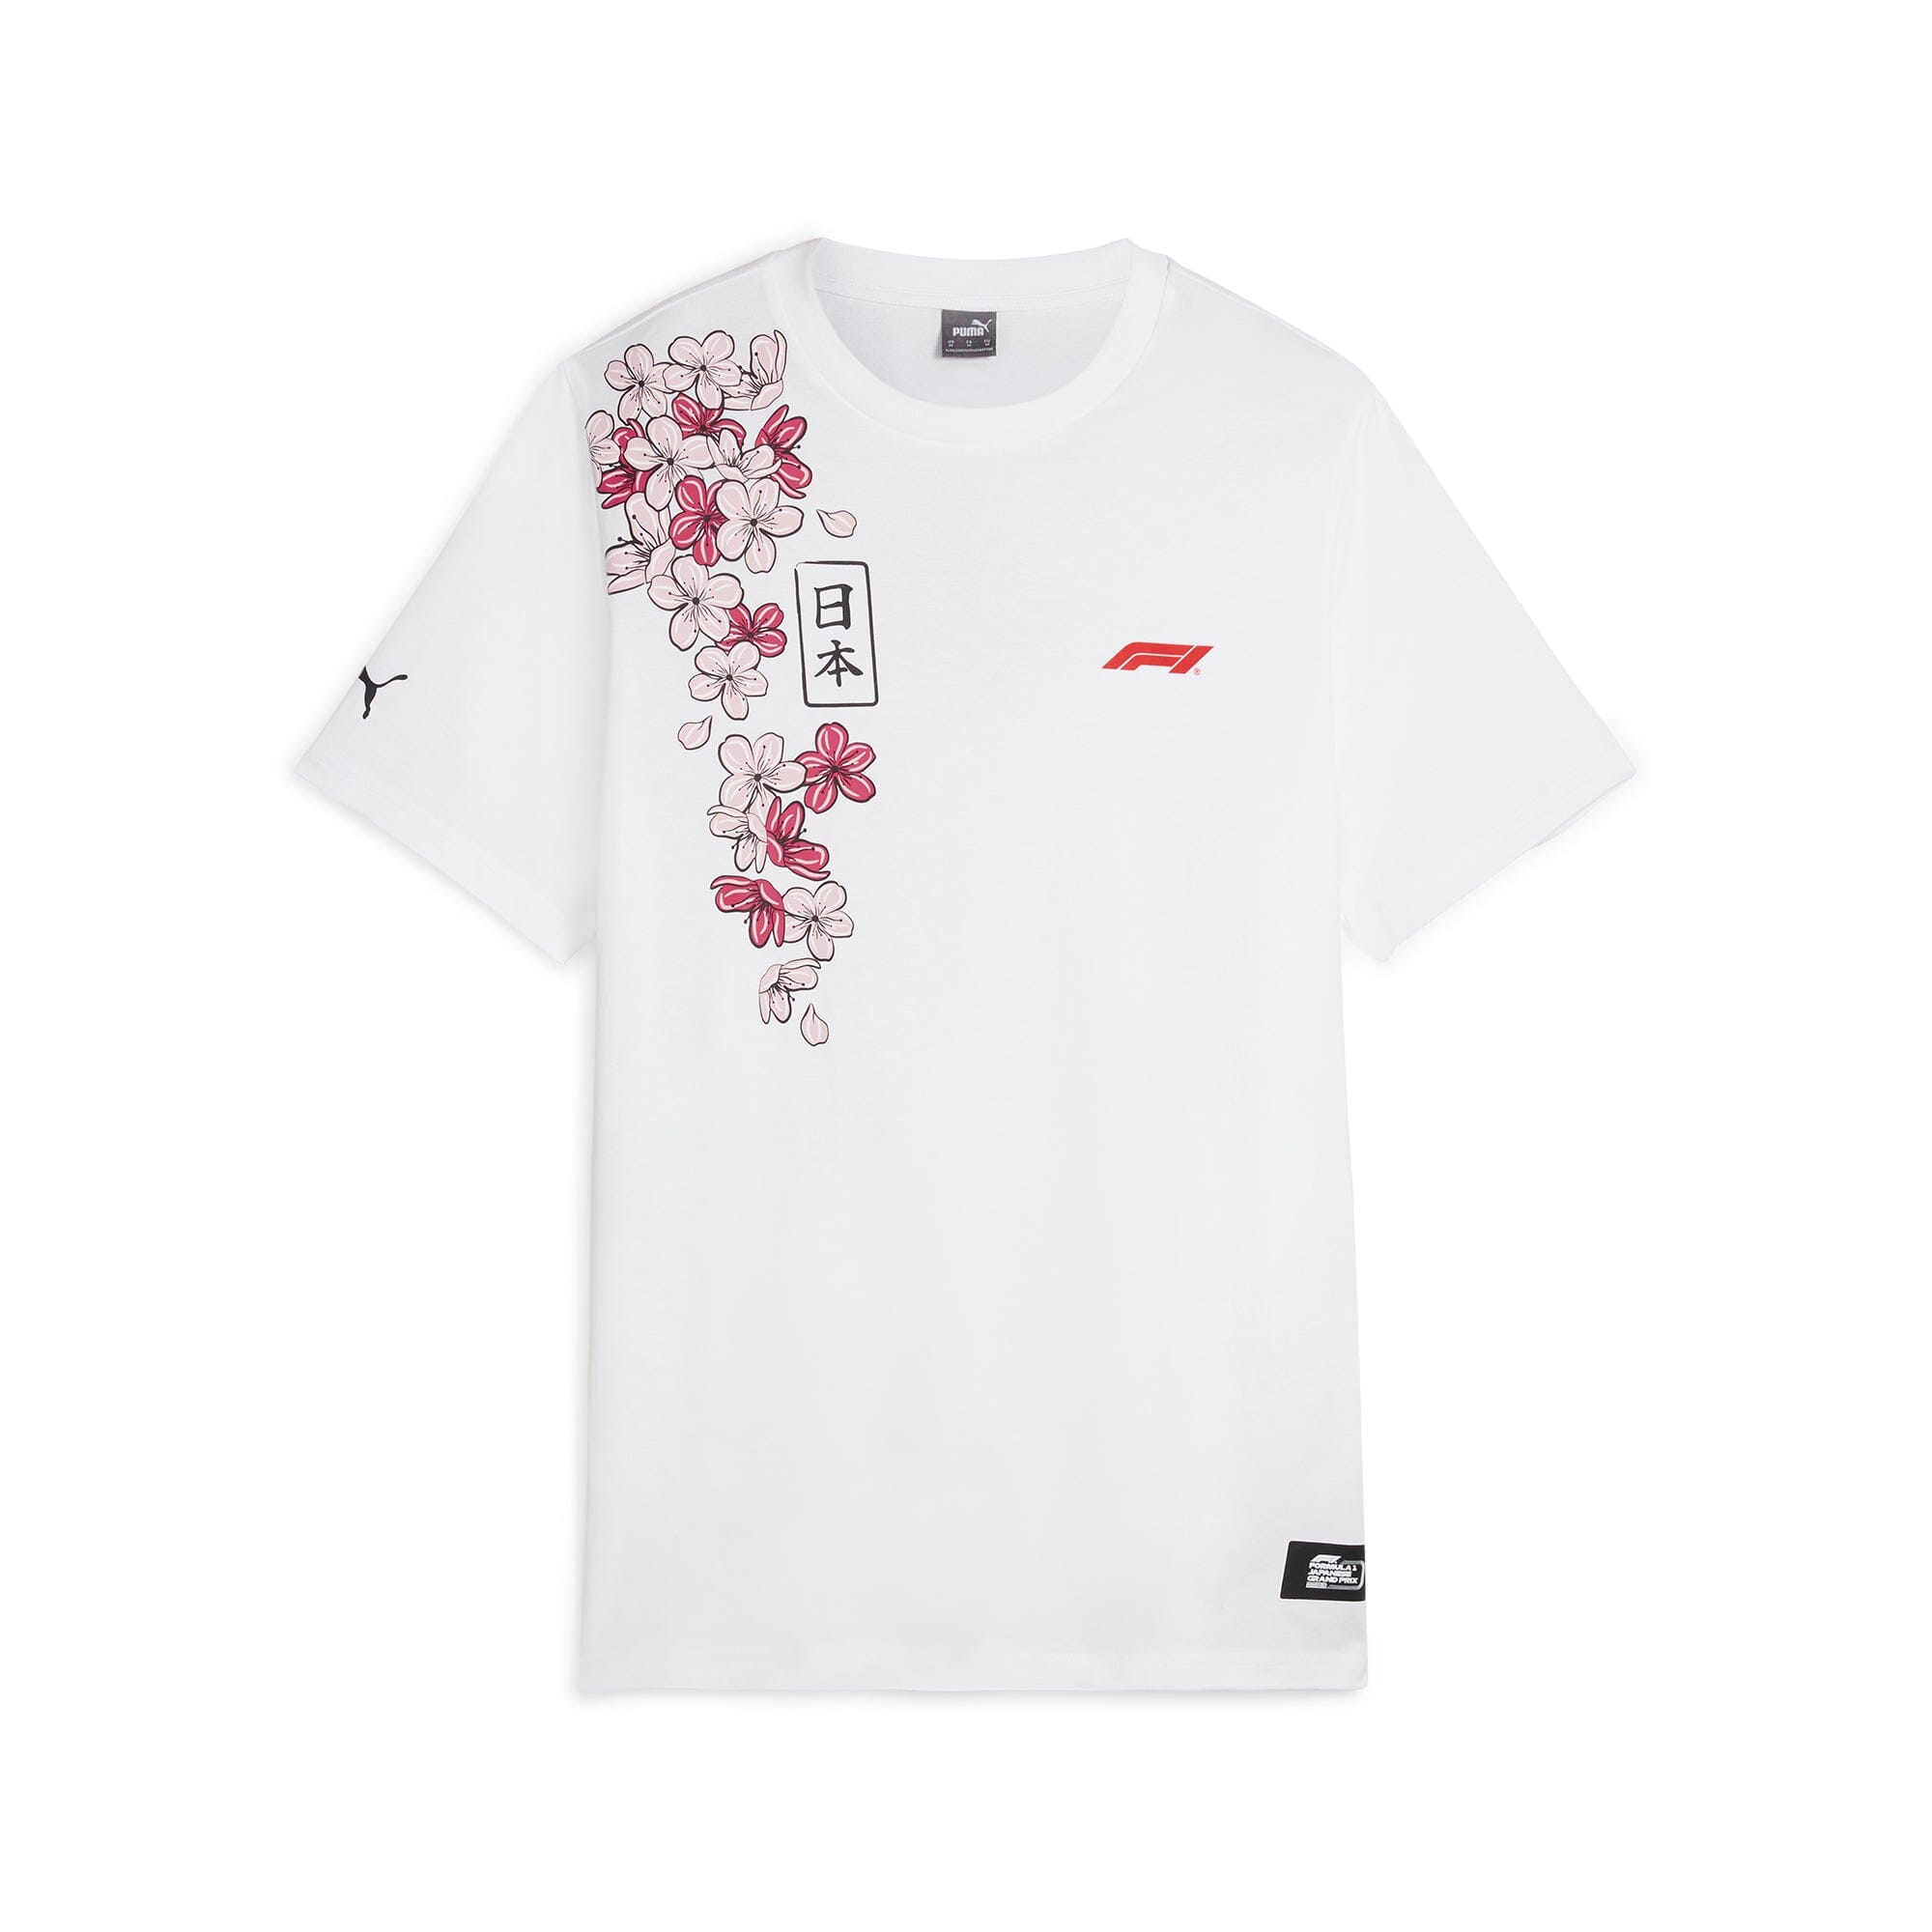 F1 Race Car Suzuka Circuit Japan T-Shirt White